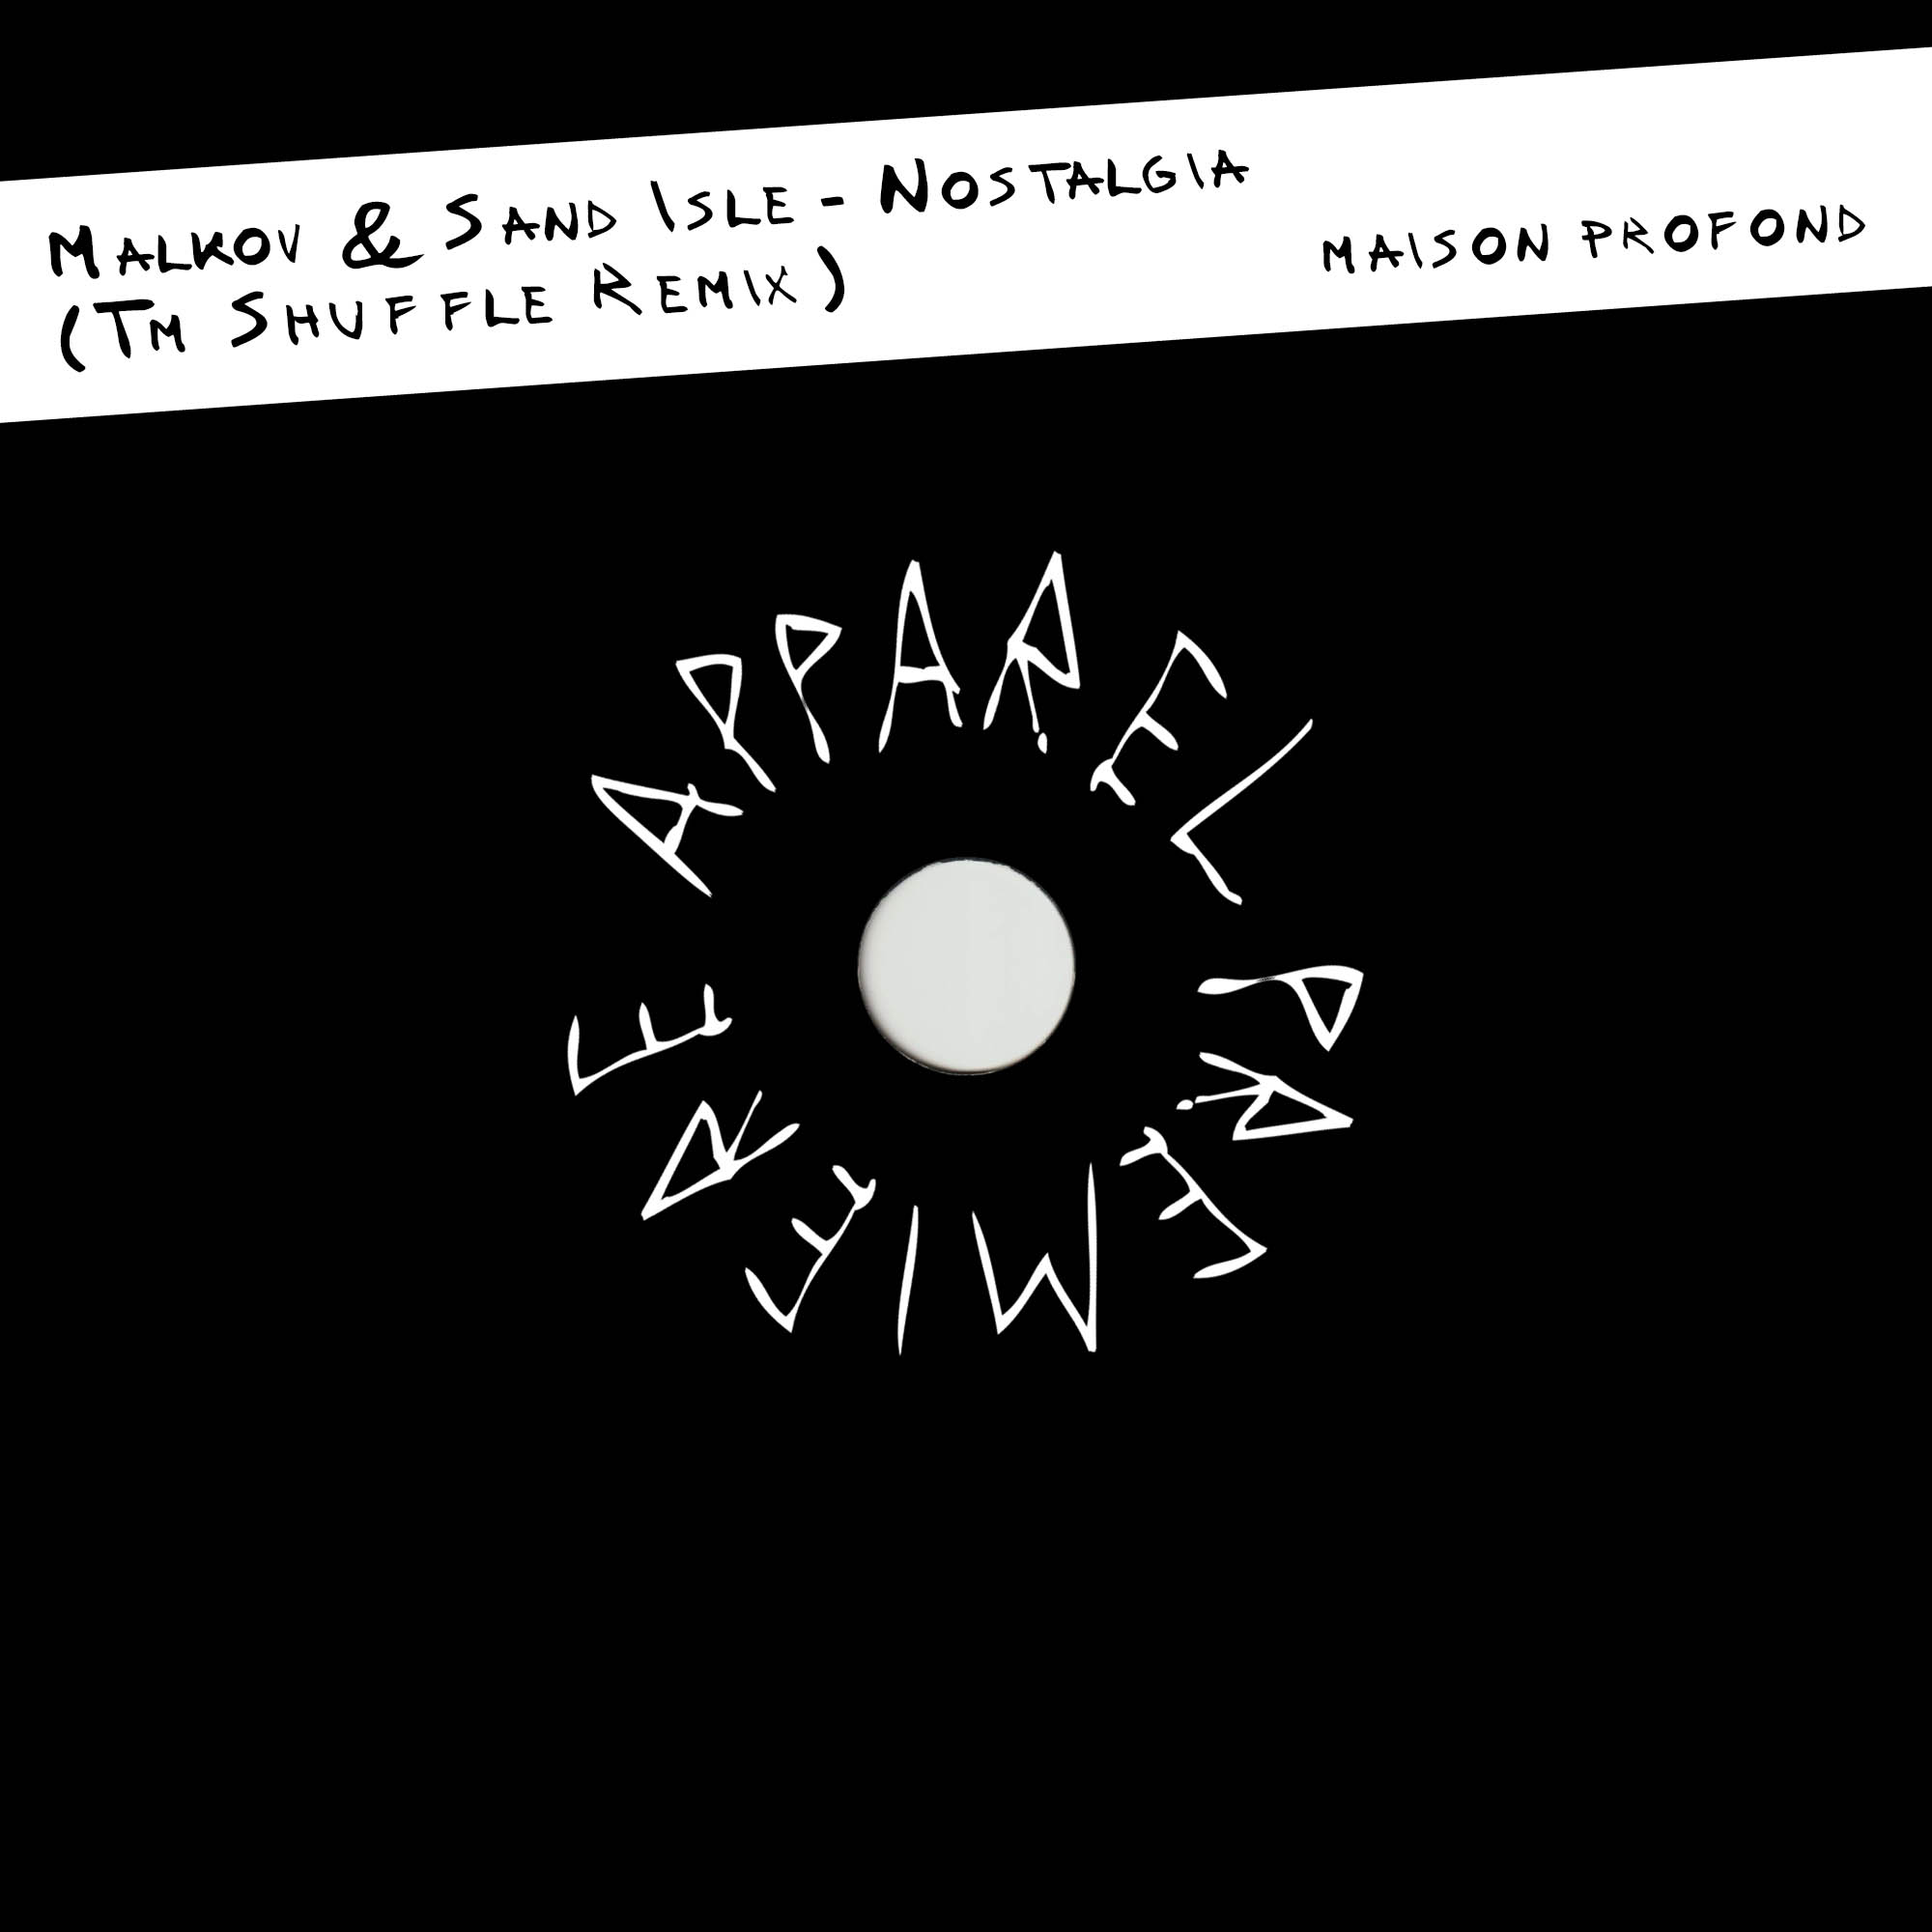 APPAREL PREMIERE Malkov & Sand Isle – Nostalgia (Tm Shuffle Remix) Maison Profonde